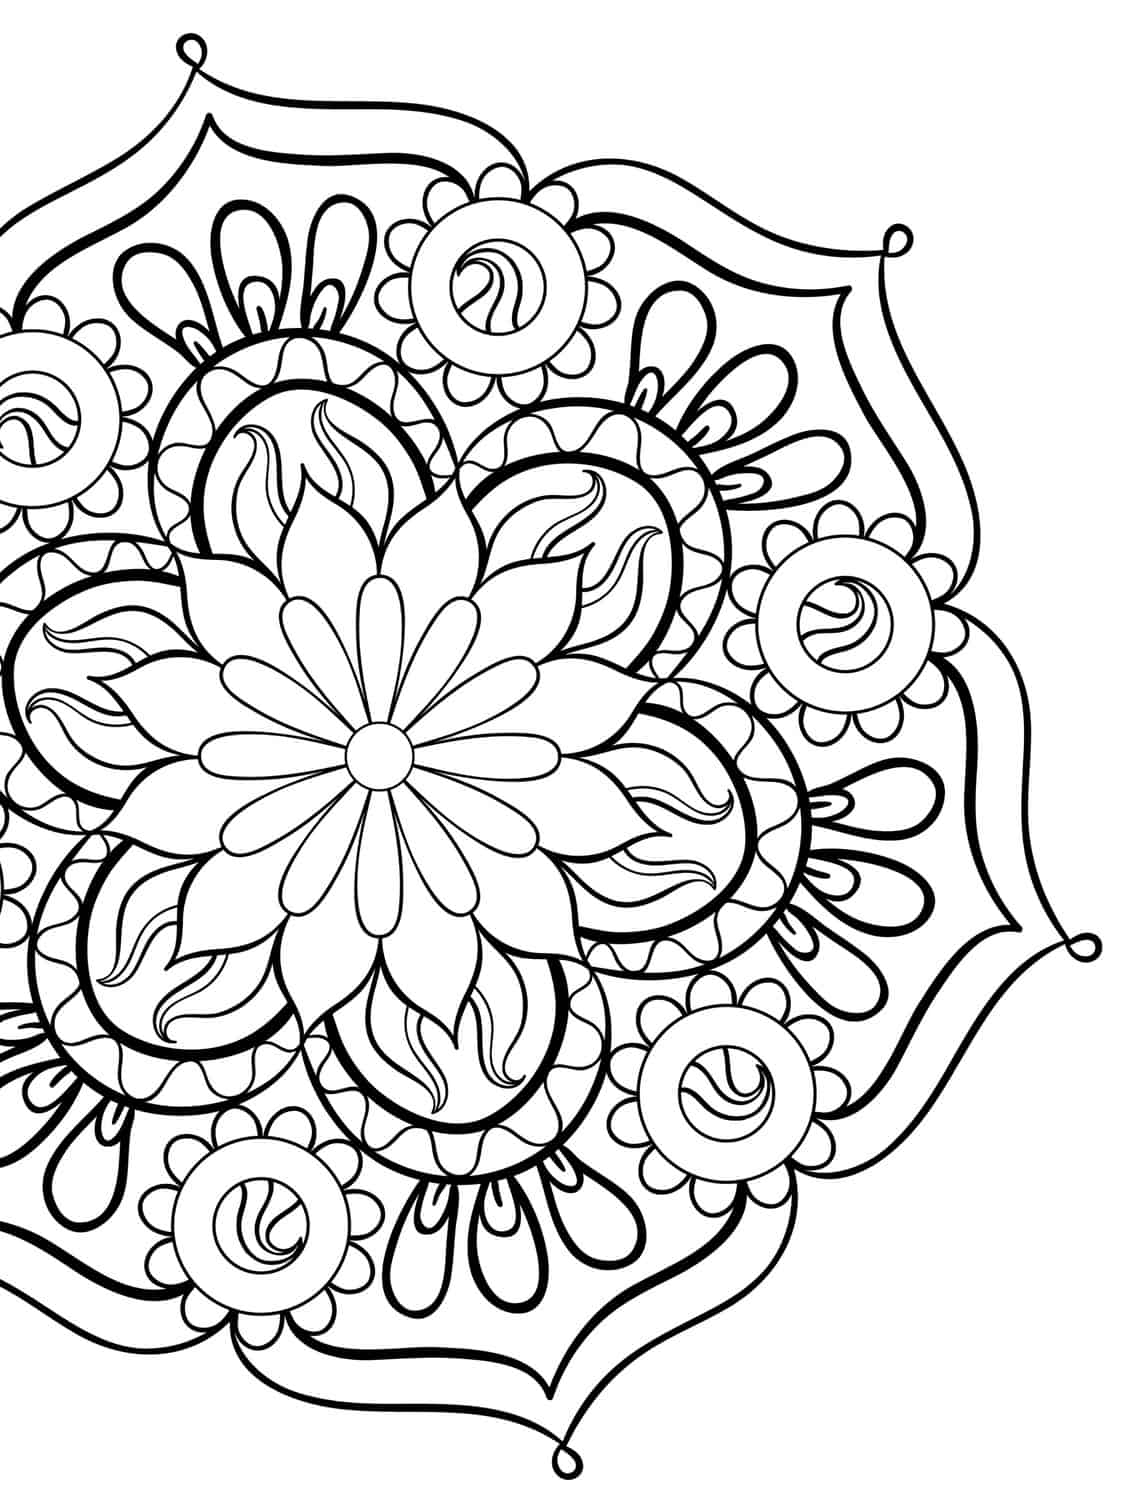 mandala coloring pages download - photo #12